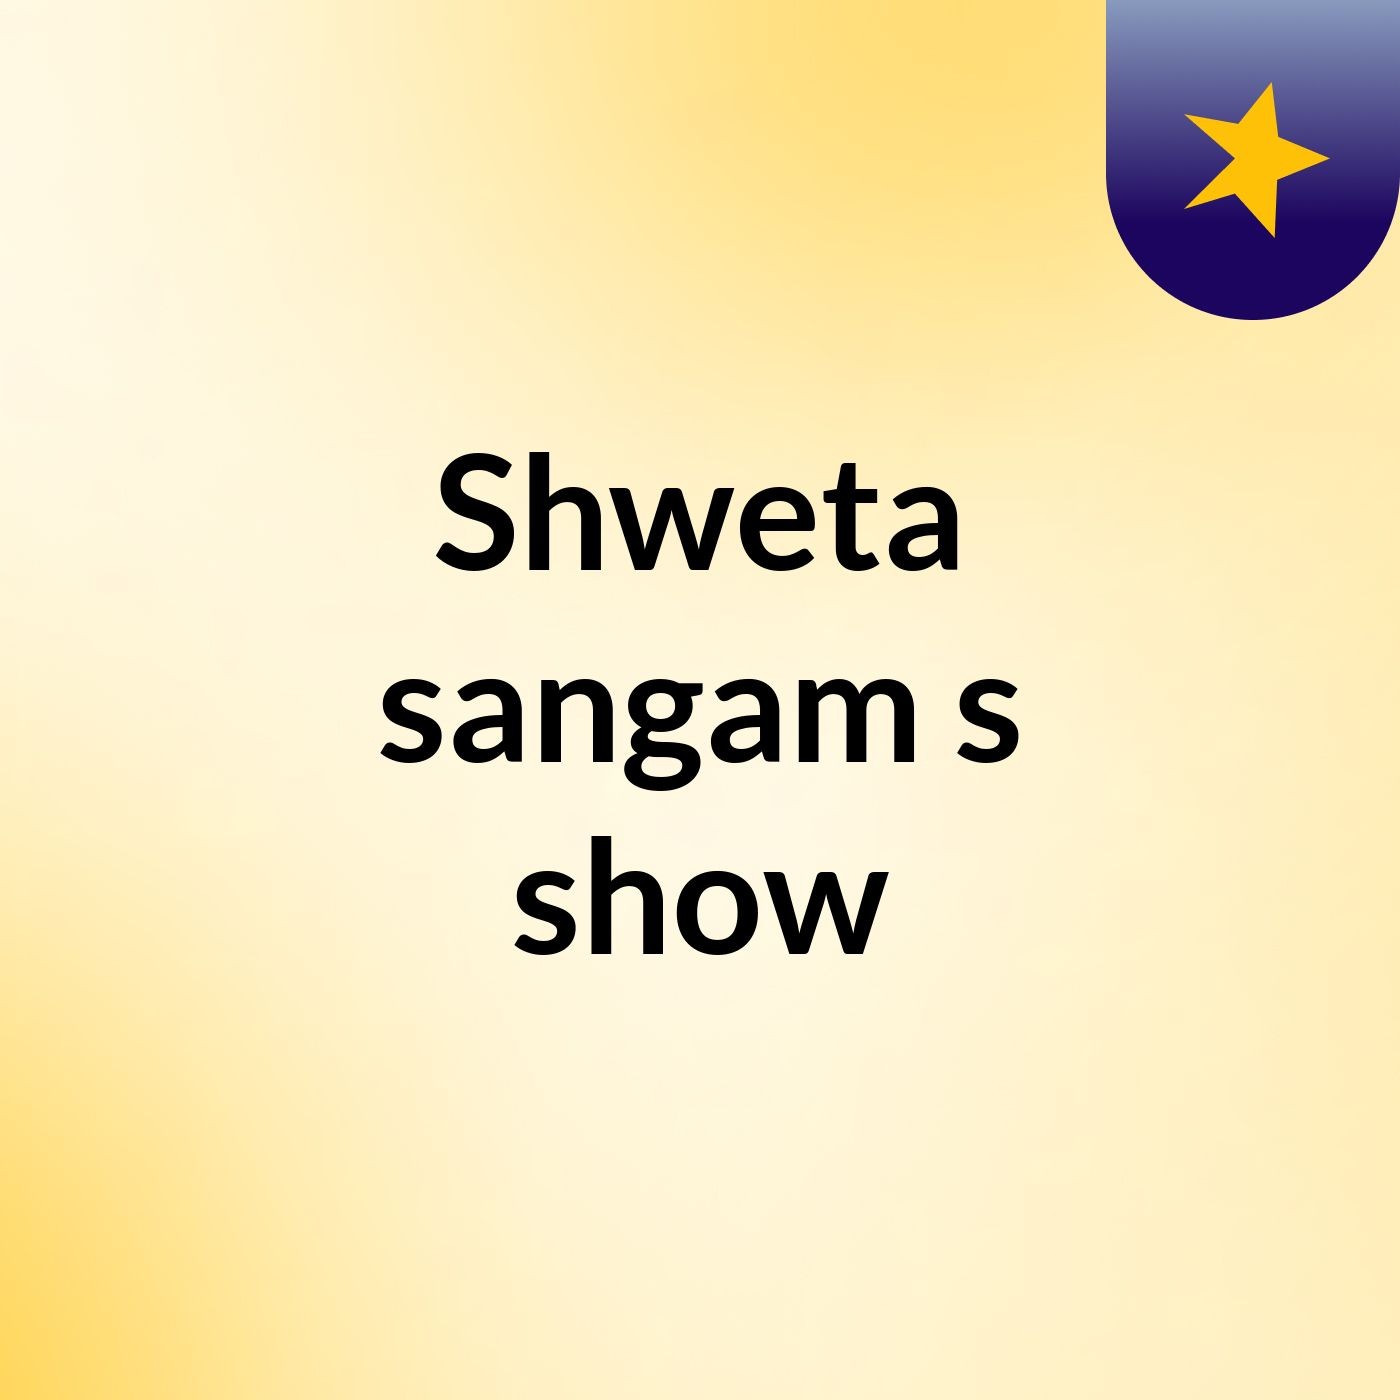 Episode 2 - Shweta sangam's show